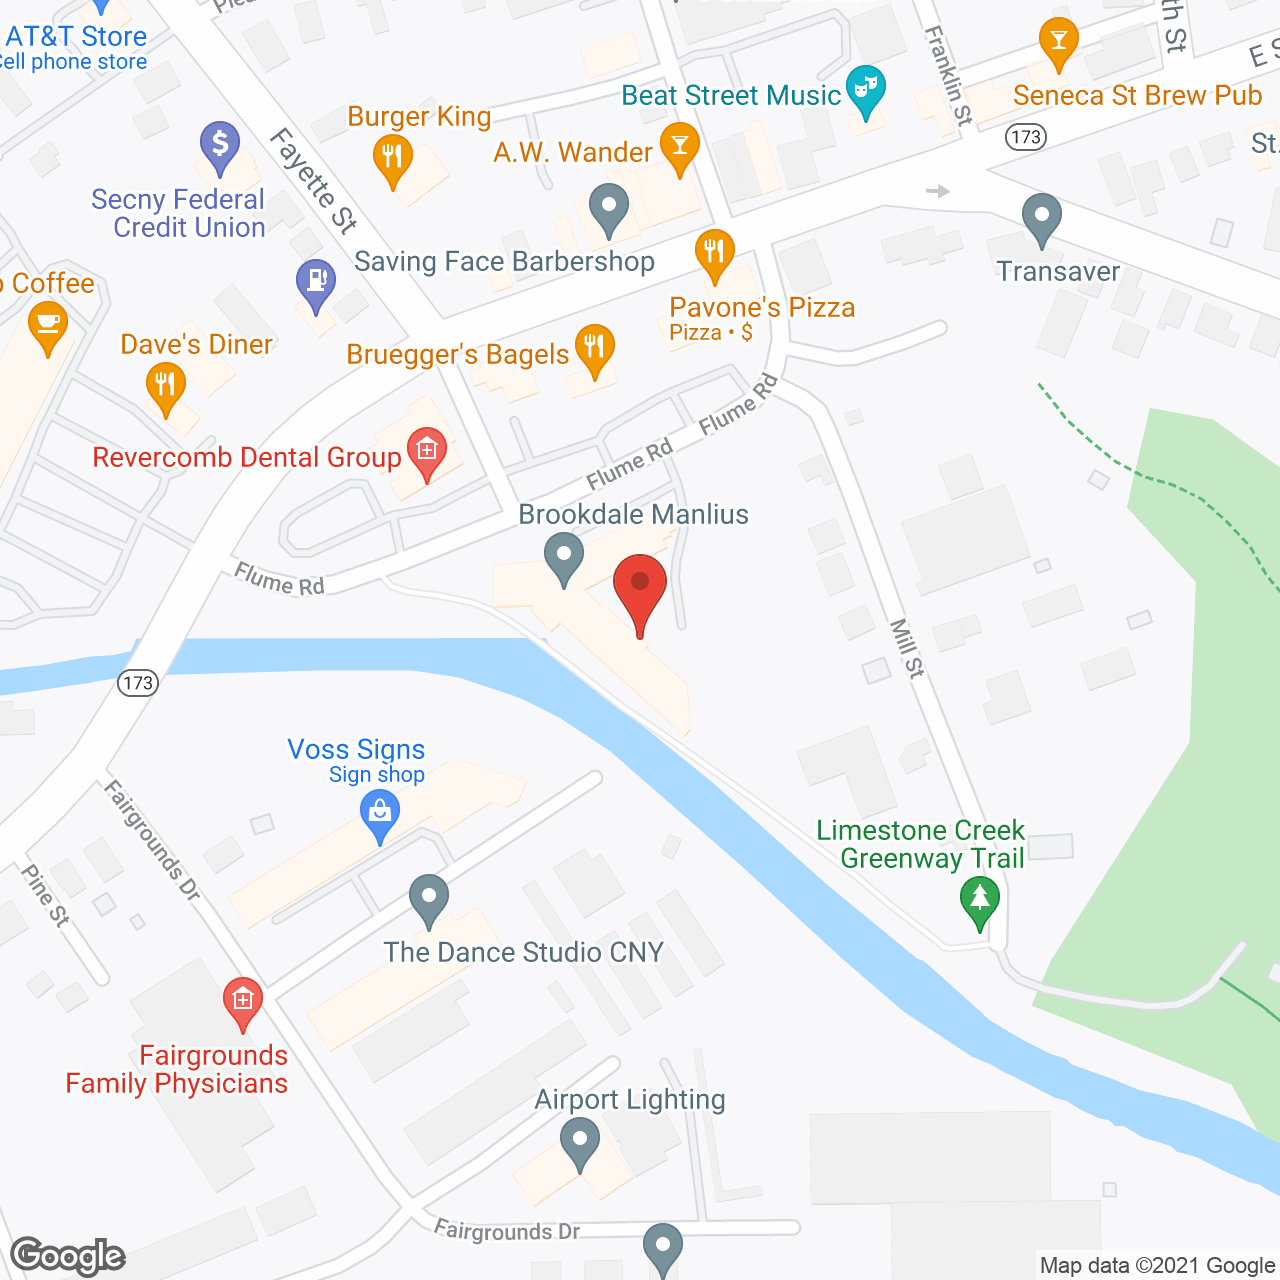 Brookdale Manlius in google map